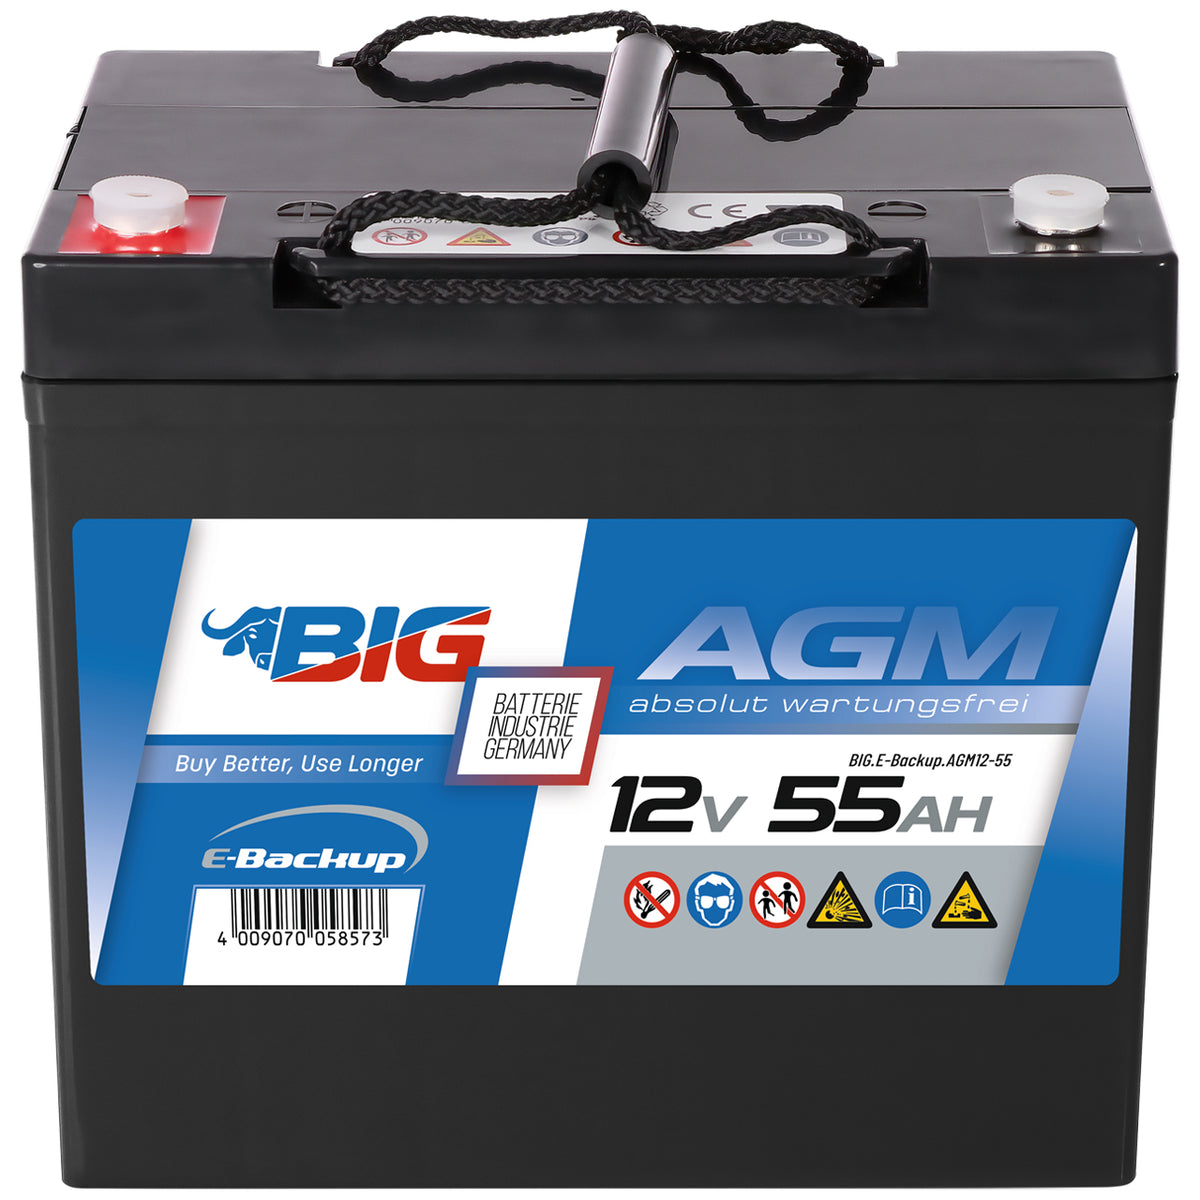 BIG E-Backup AGM 12V 55Ah